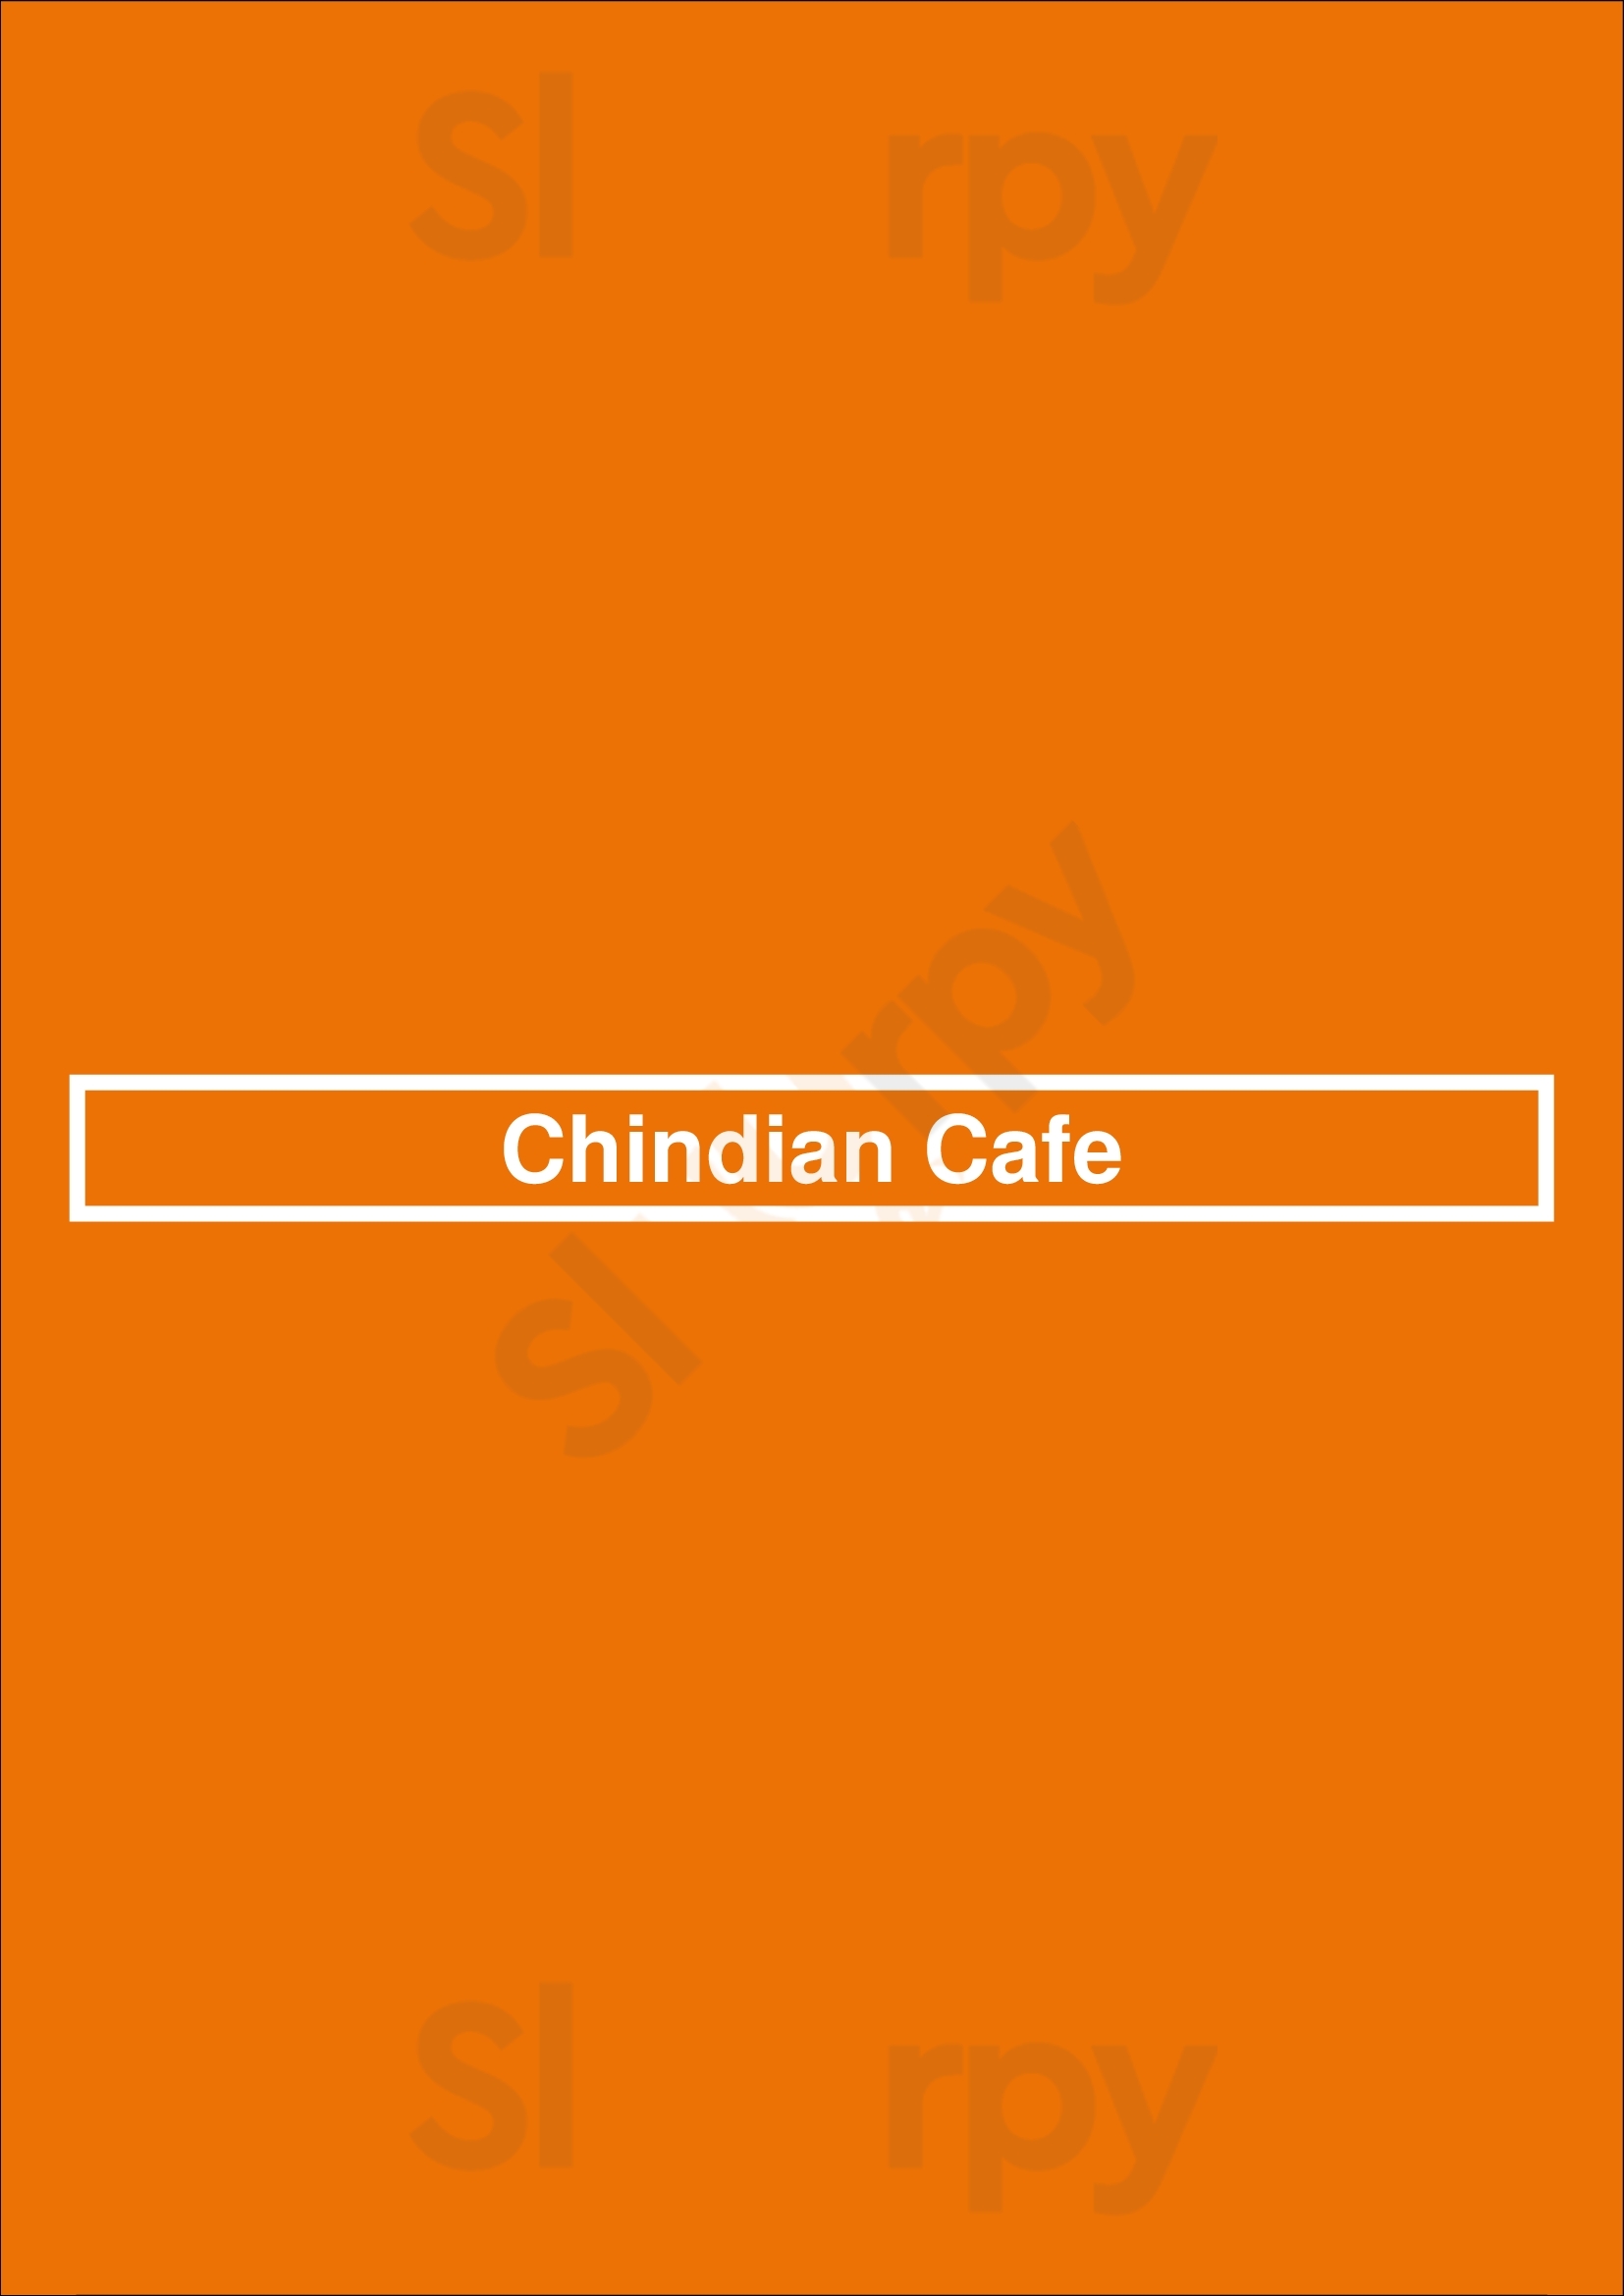 Chindian Cafe Minneapolis Menu - 1